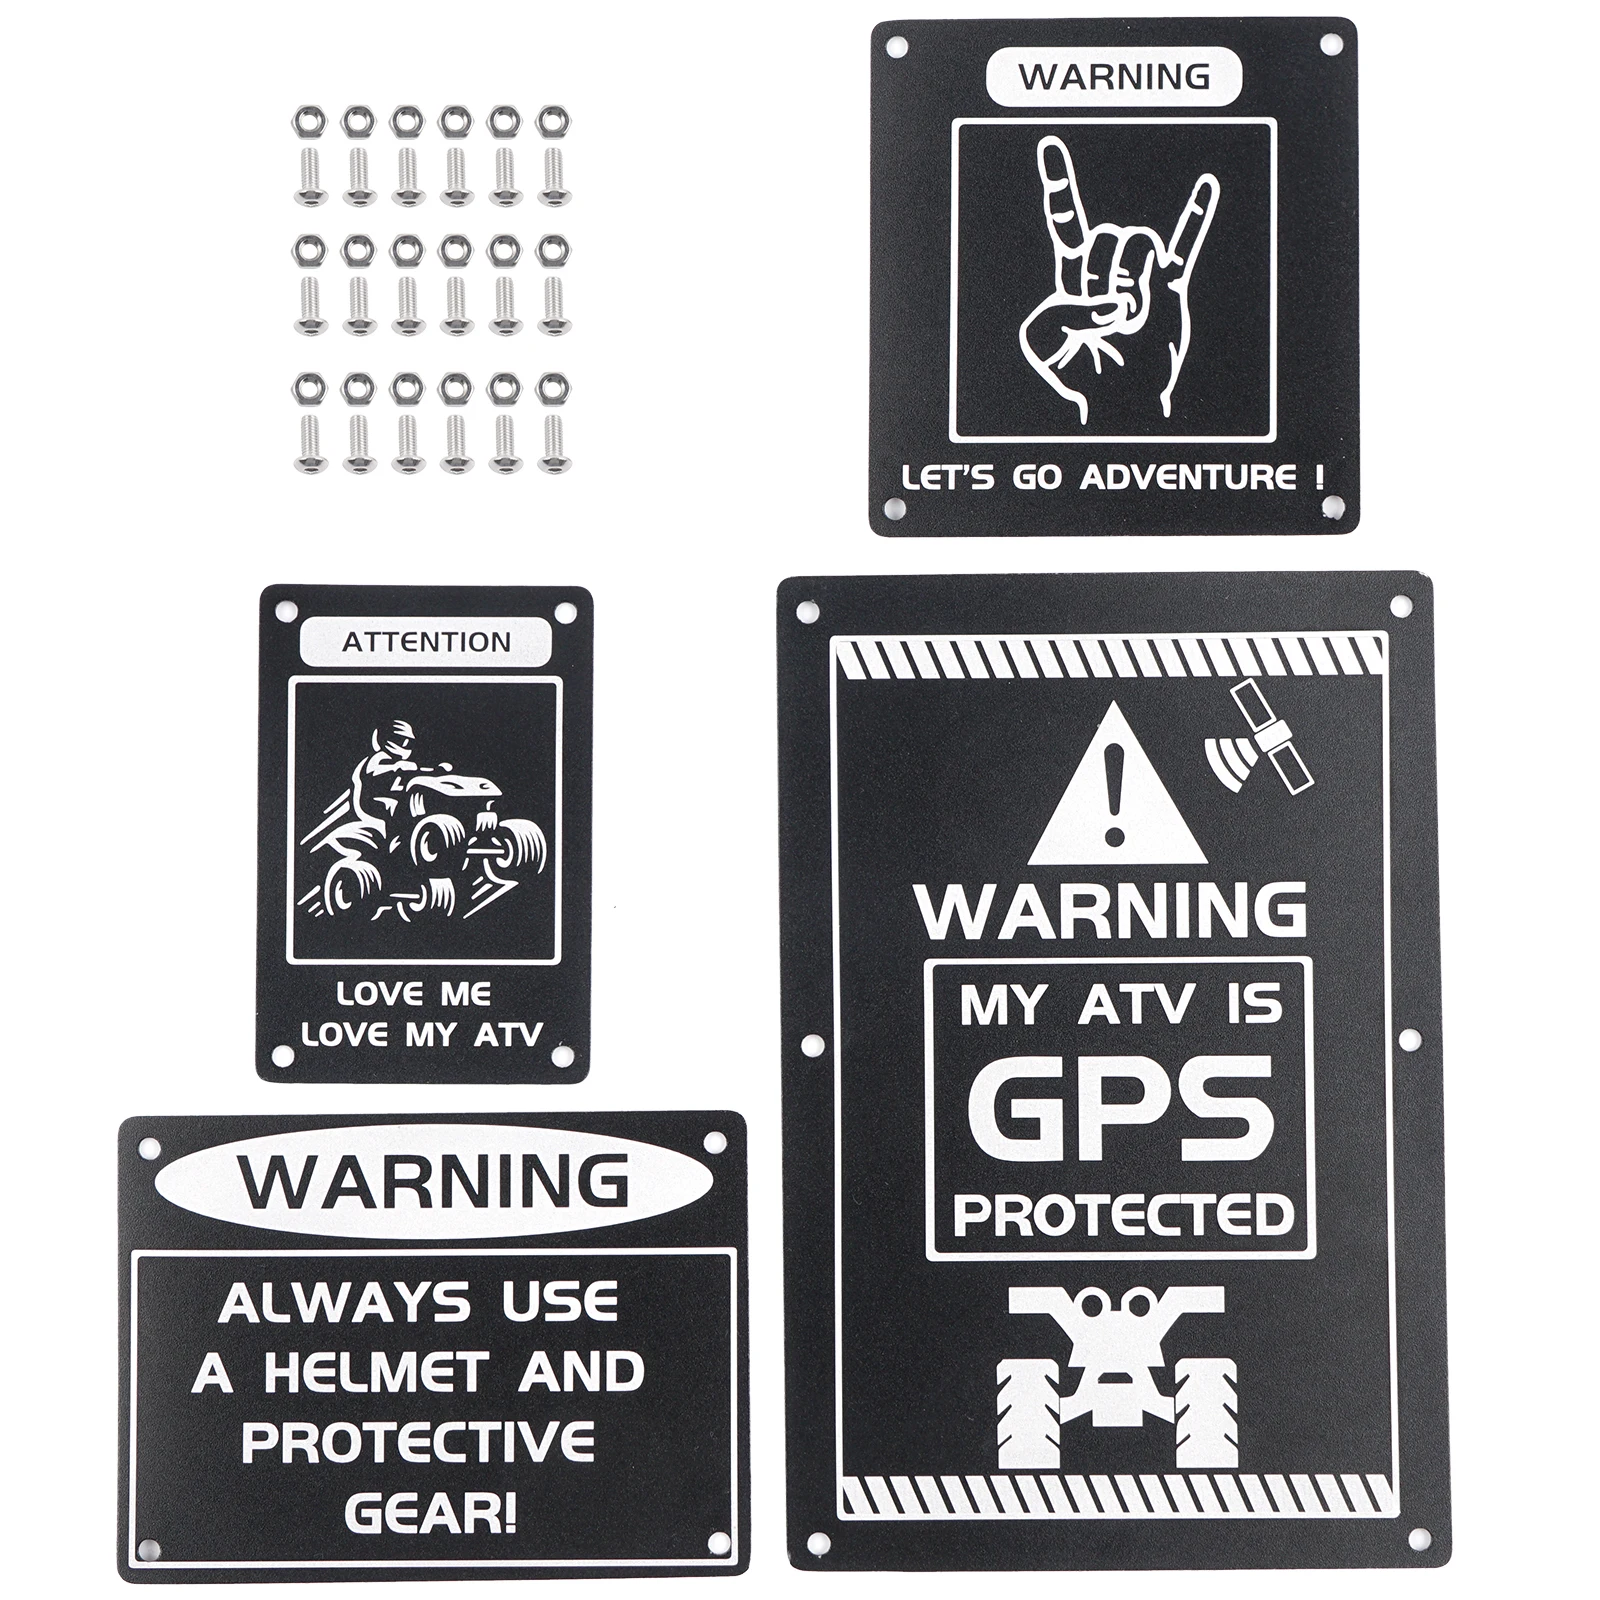 ATV Fender Warning Tag Plates Badges Decals Stickers For Yamaha YFZ450R 2014-2020 YFZ450 YFZ450R SPECIAL EDITION RAPTOR 700 700R